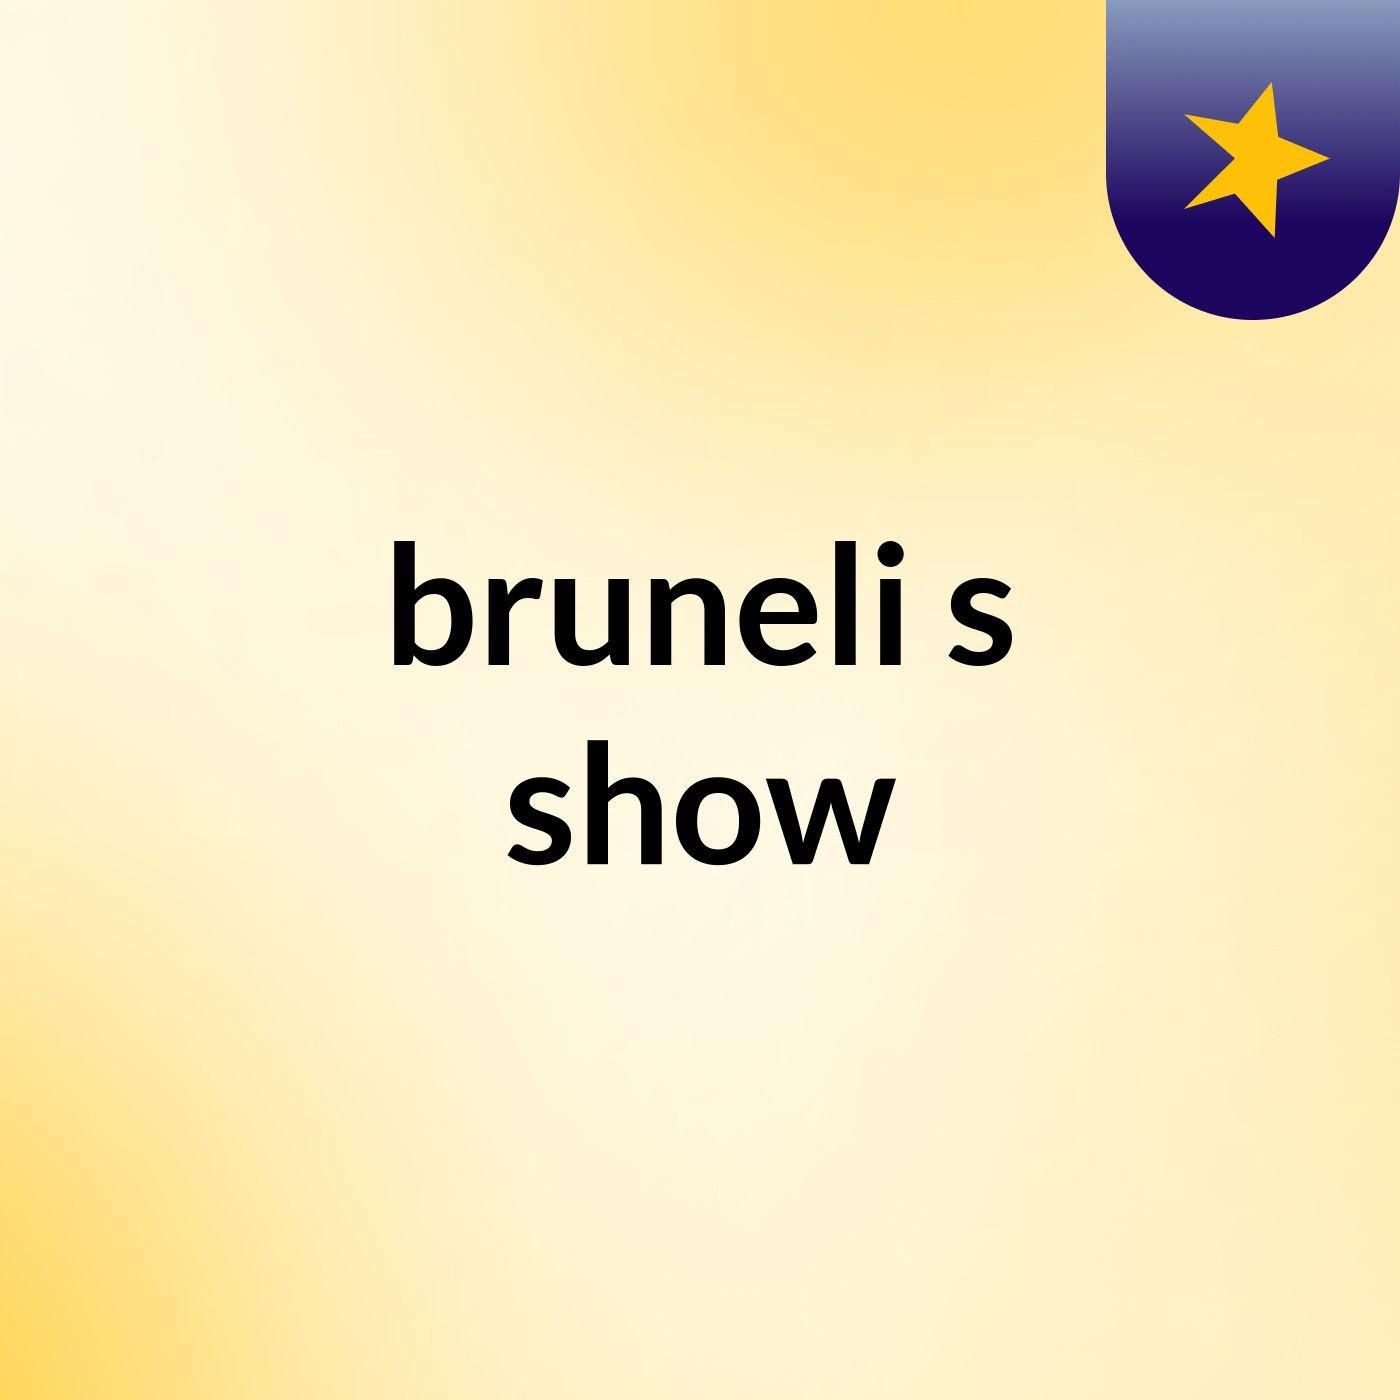 bruneli's show